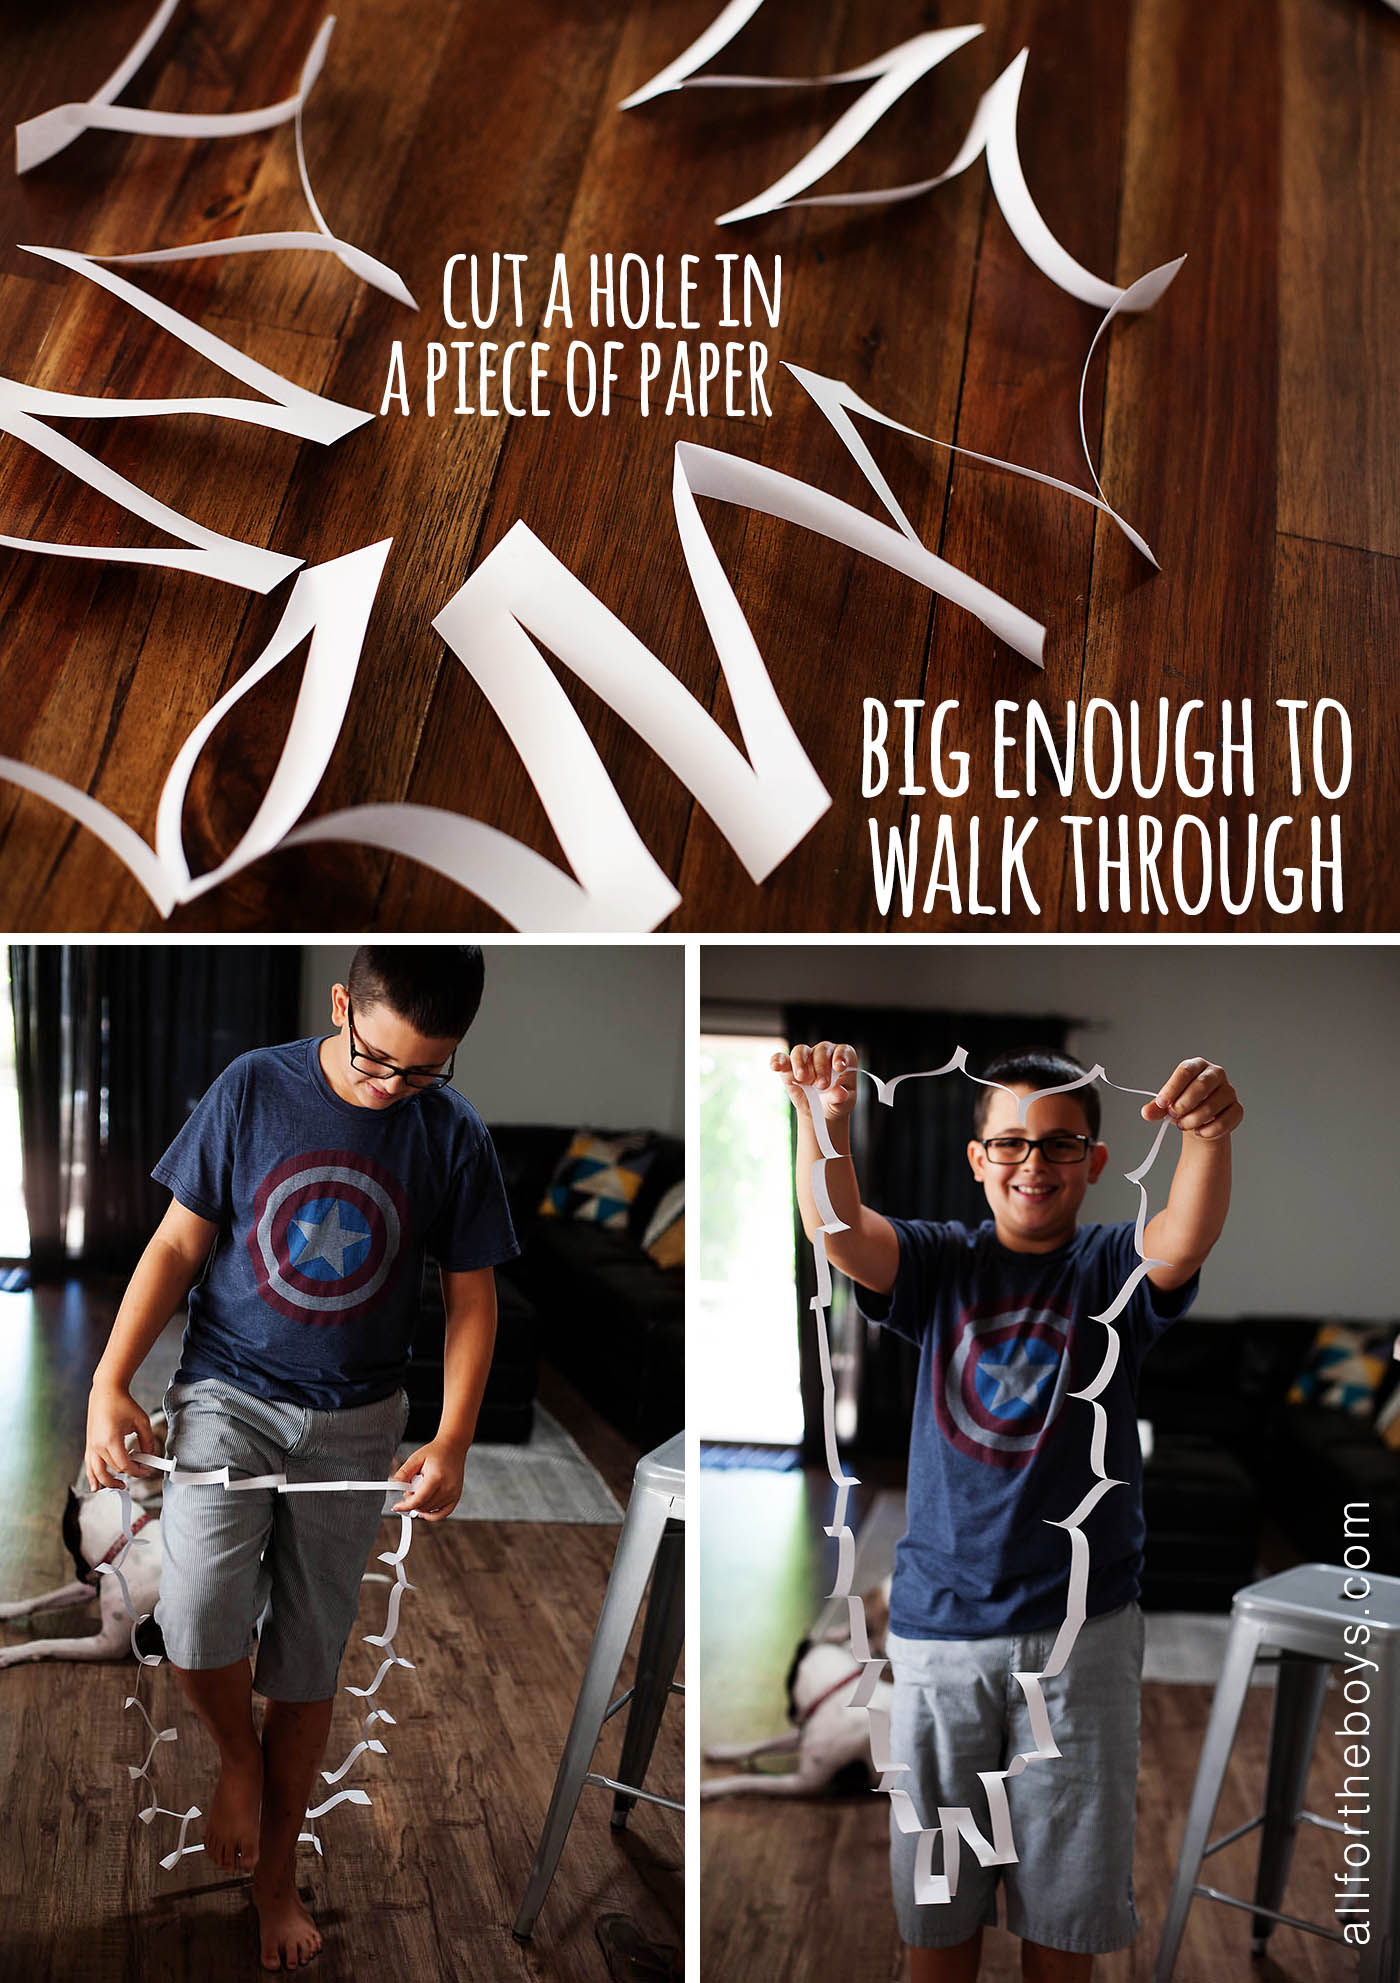 Quick trick: Walk through a piece of paper